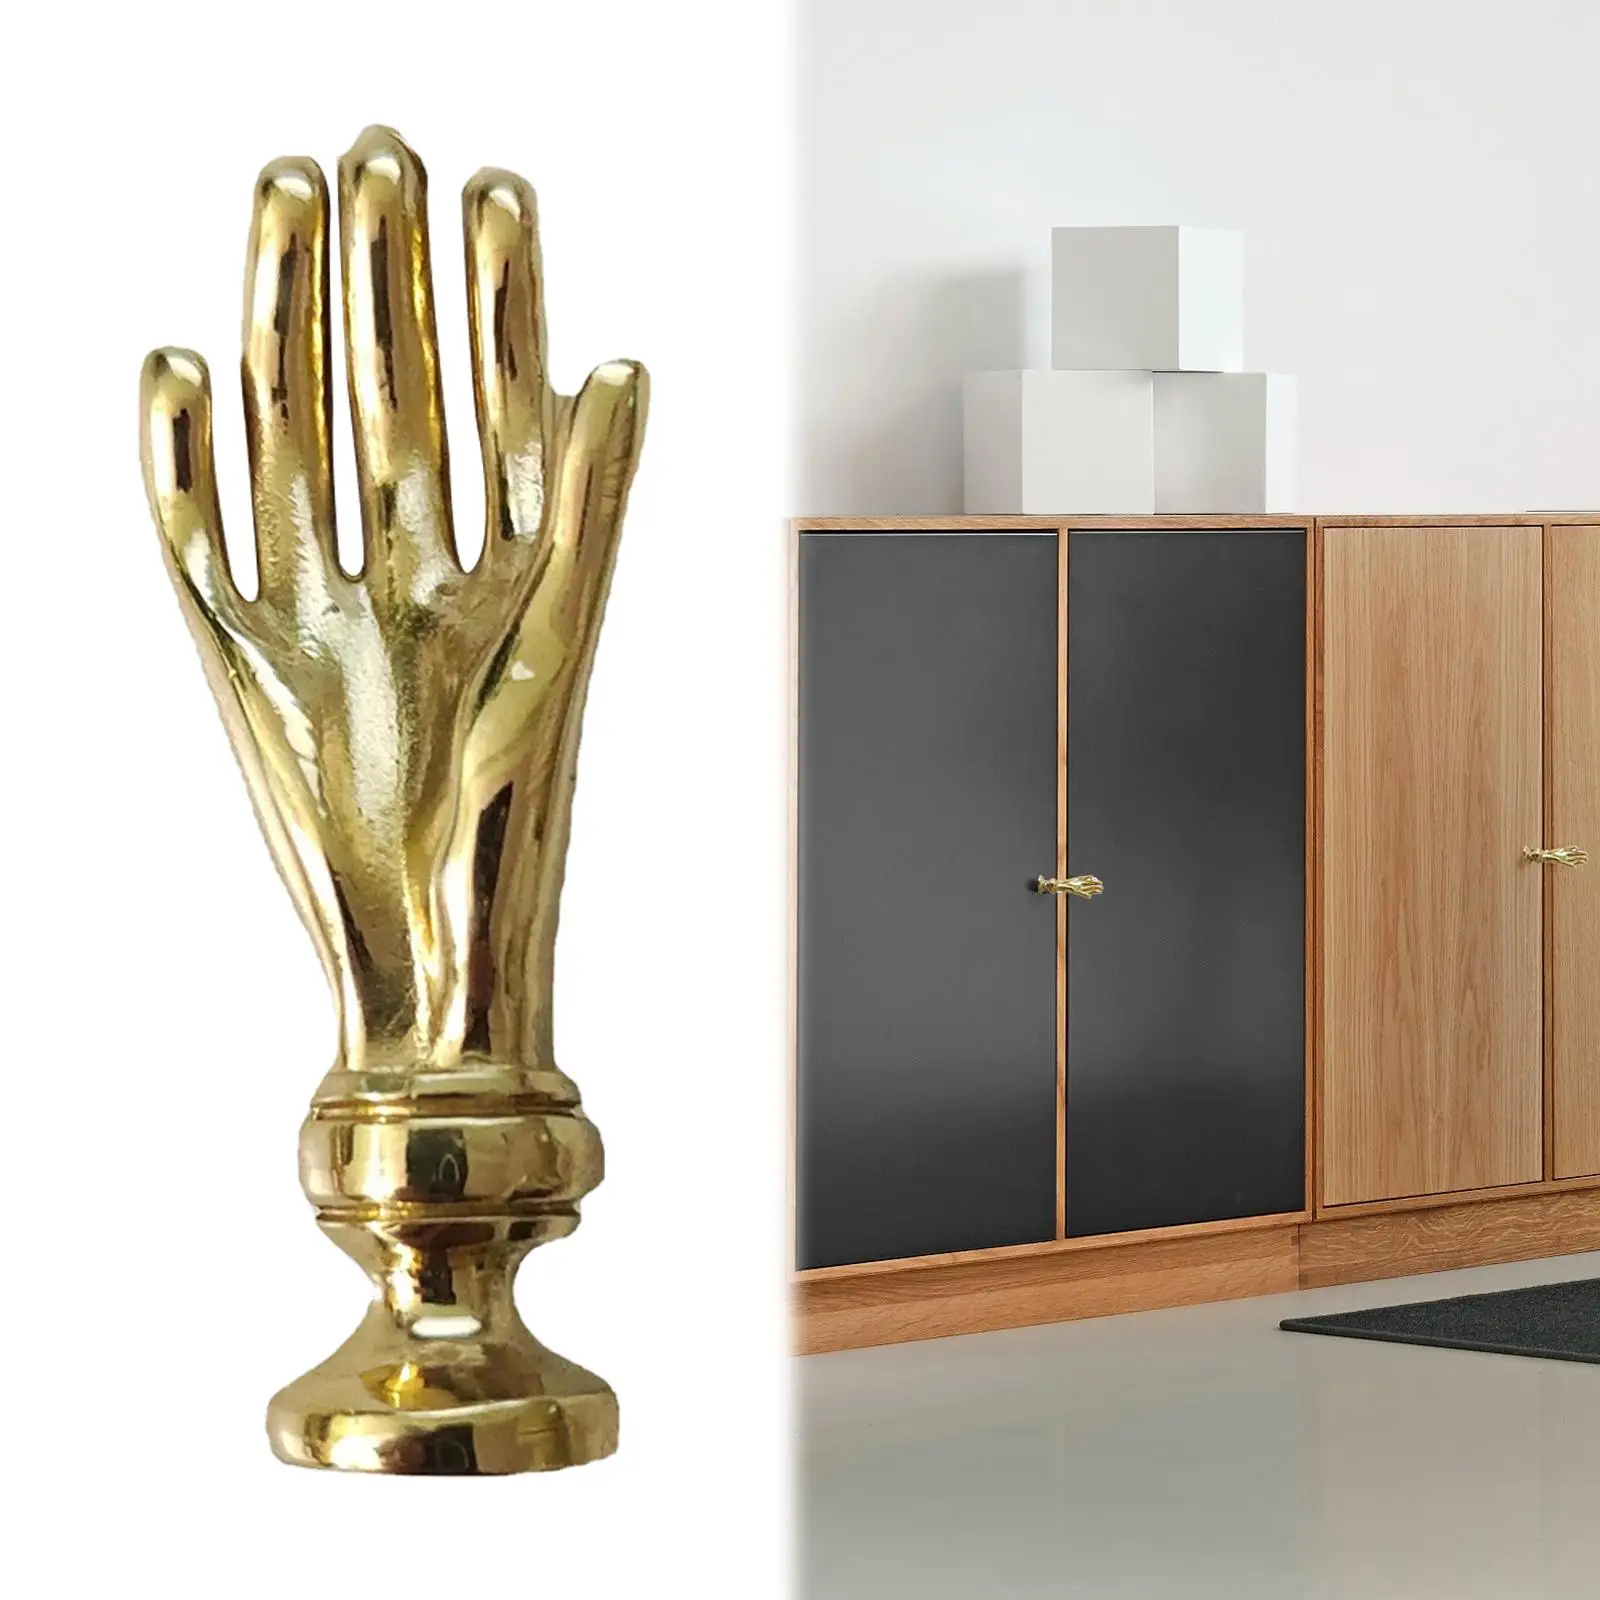 Drawer Handles Hand Shaped Copper Dresser Knobs for Bathroom Closet Cupboard